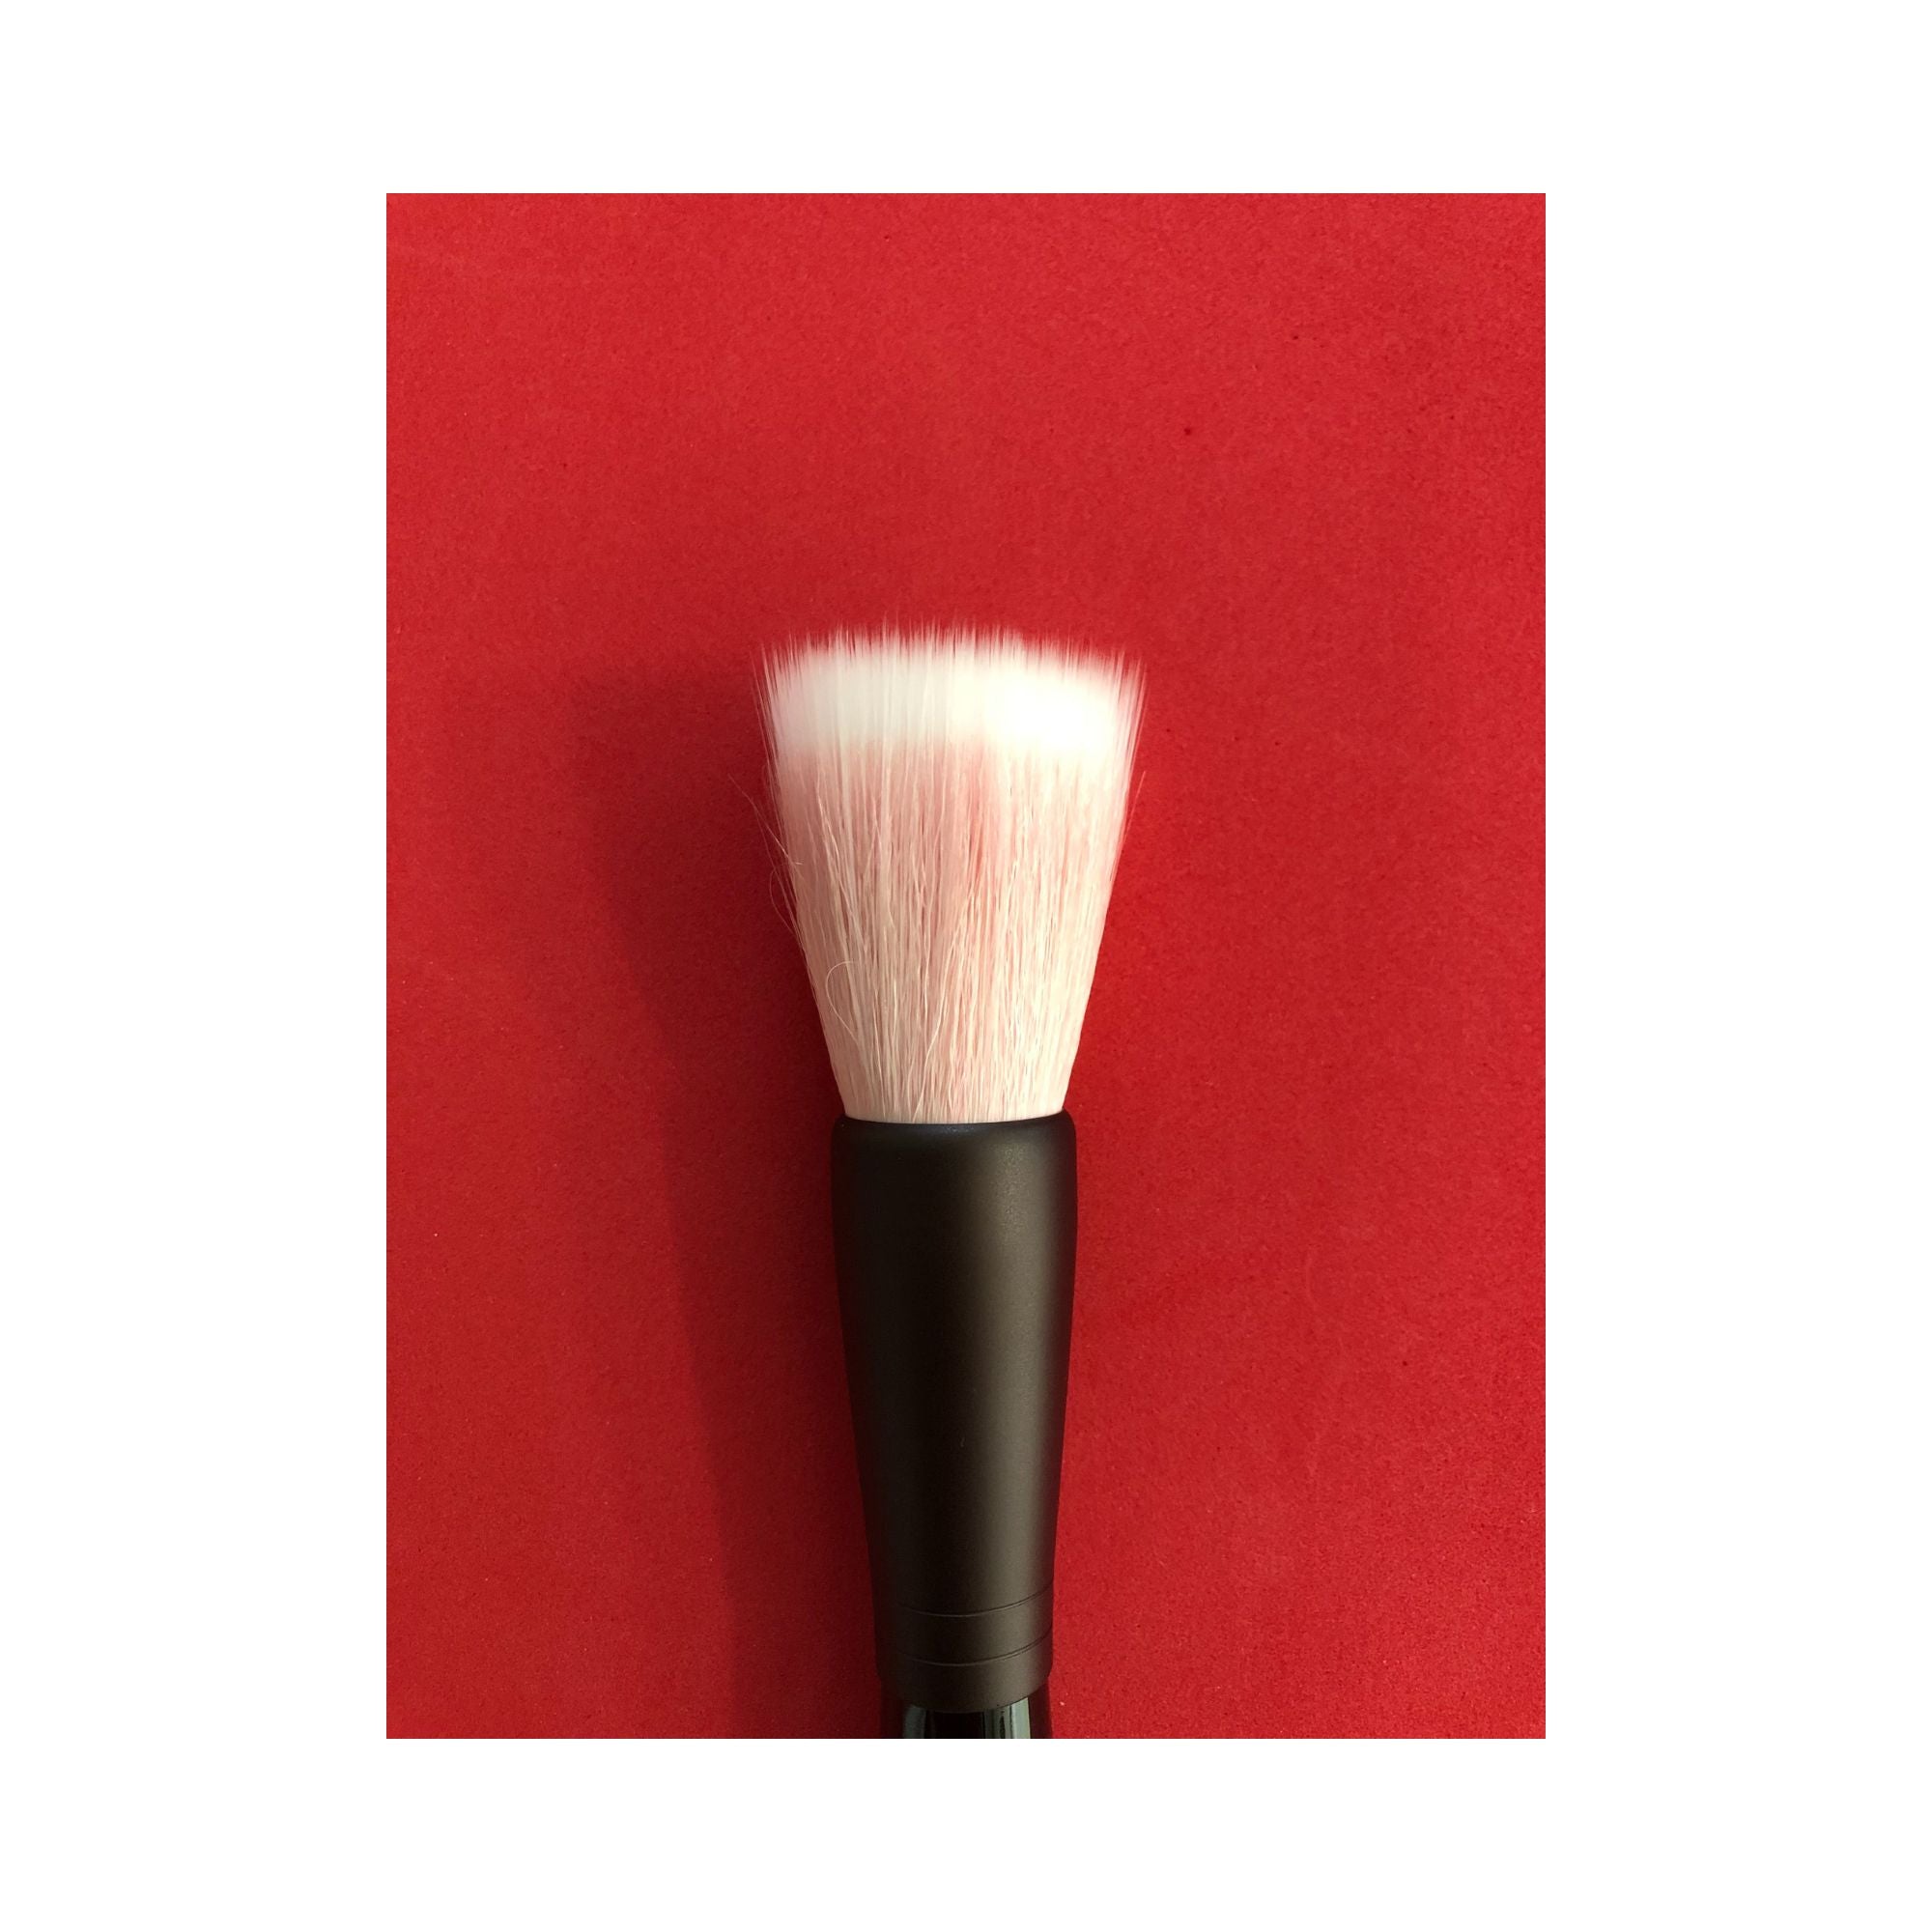 Koyudo Multipurpose Stippling Shift Brush (Outlet) - Fude Beauty, Japanese Makeup Brushes